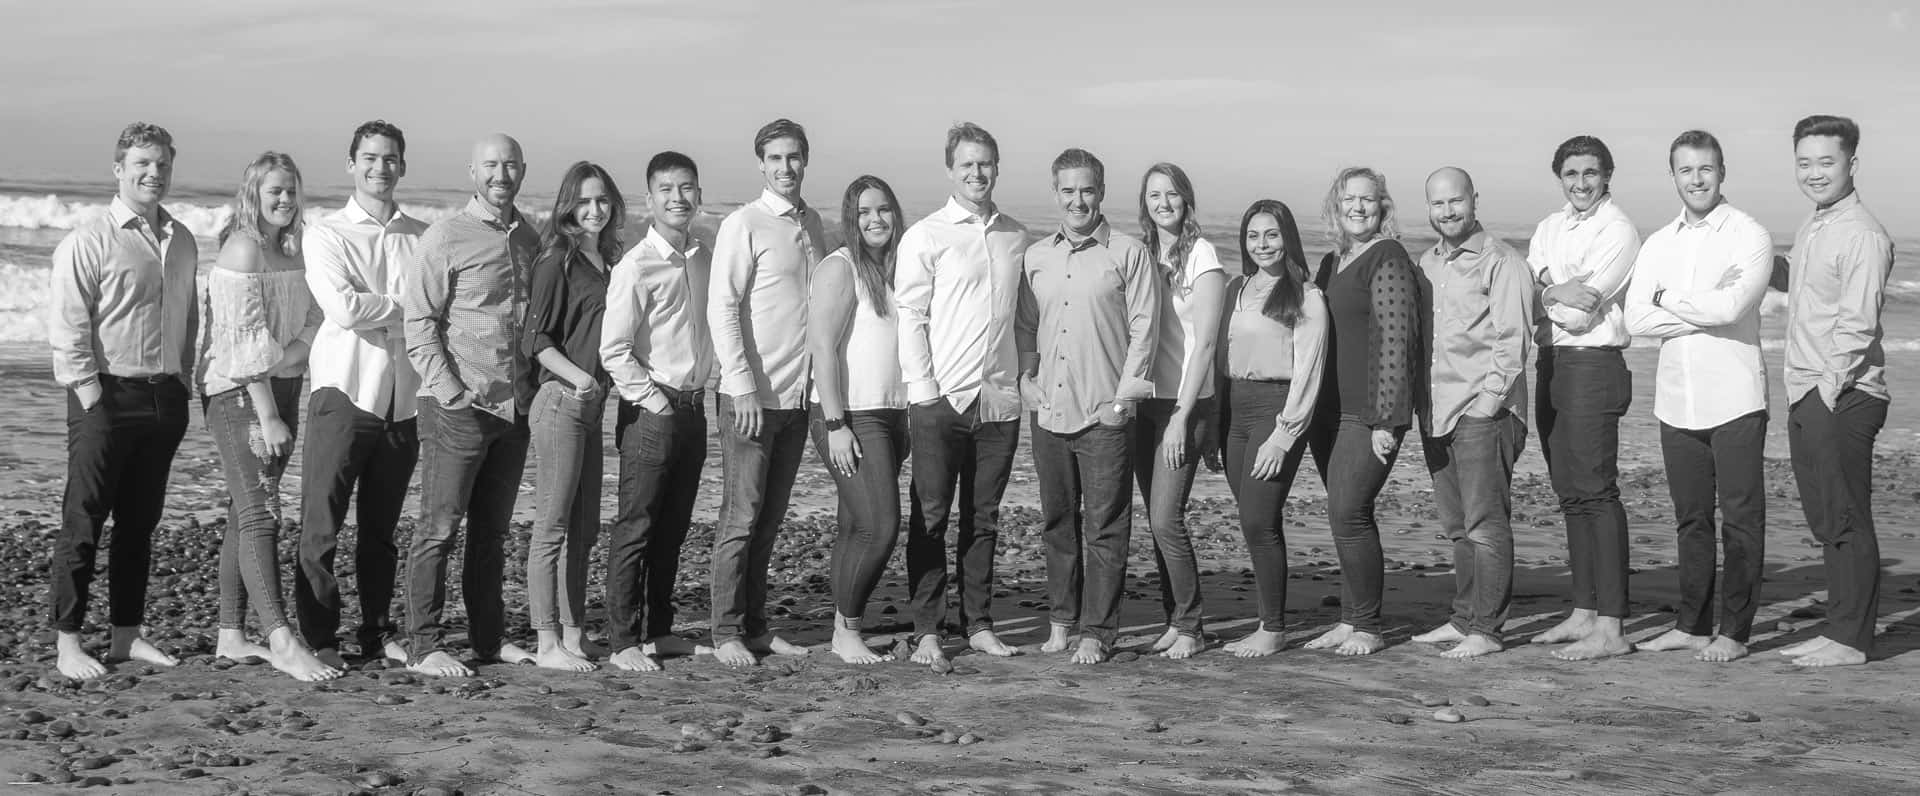 seg team photo on the beach